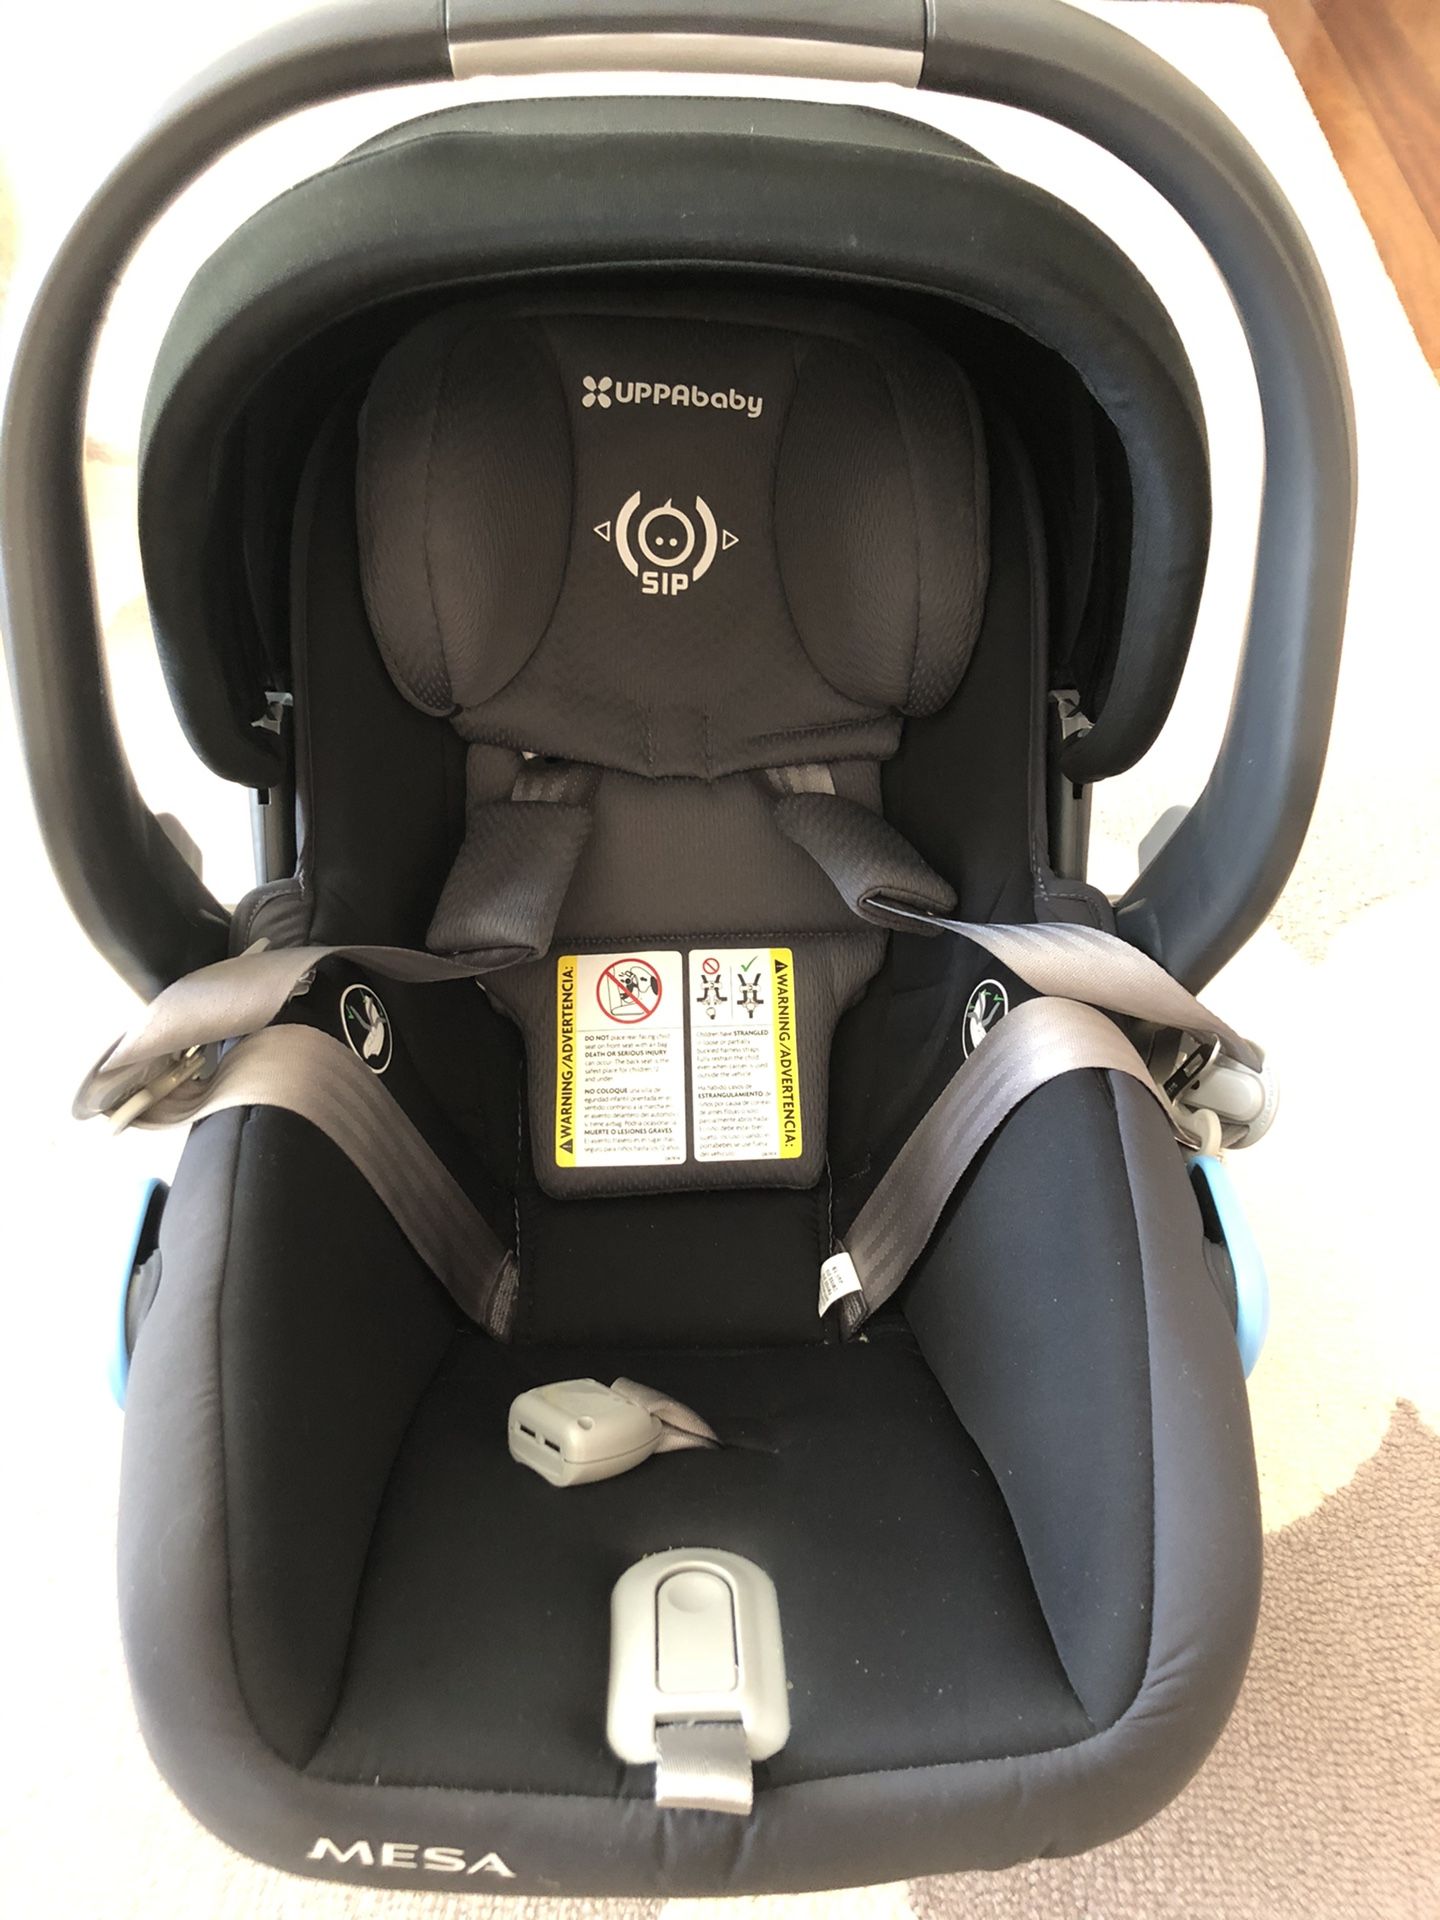 Uppa baby Messa 2019 Car Seat And 2 Bases